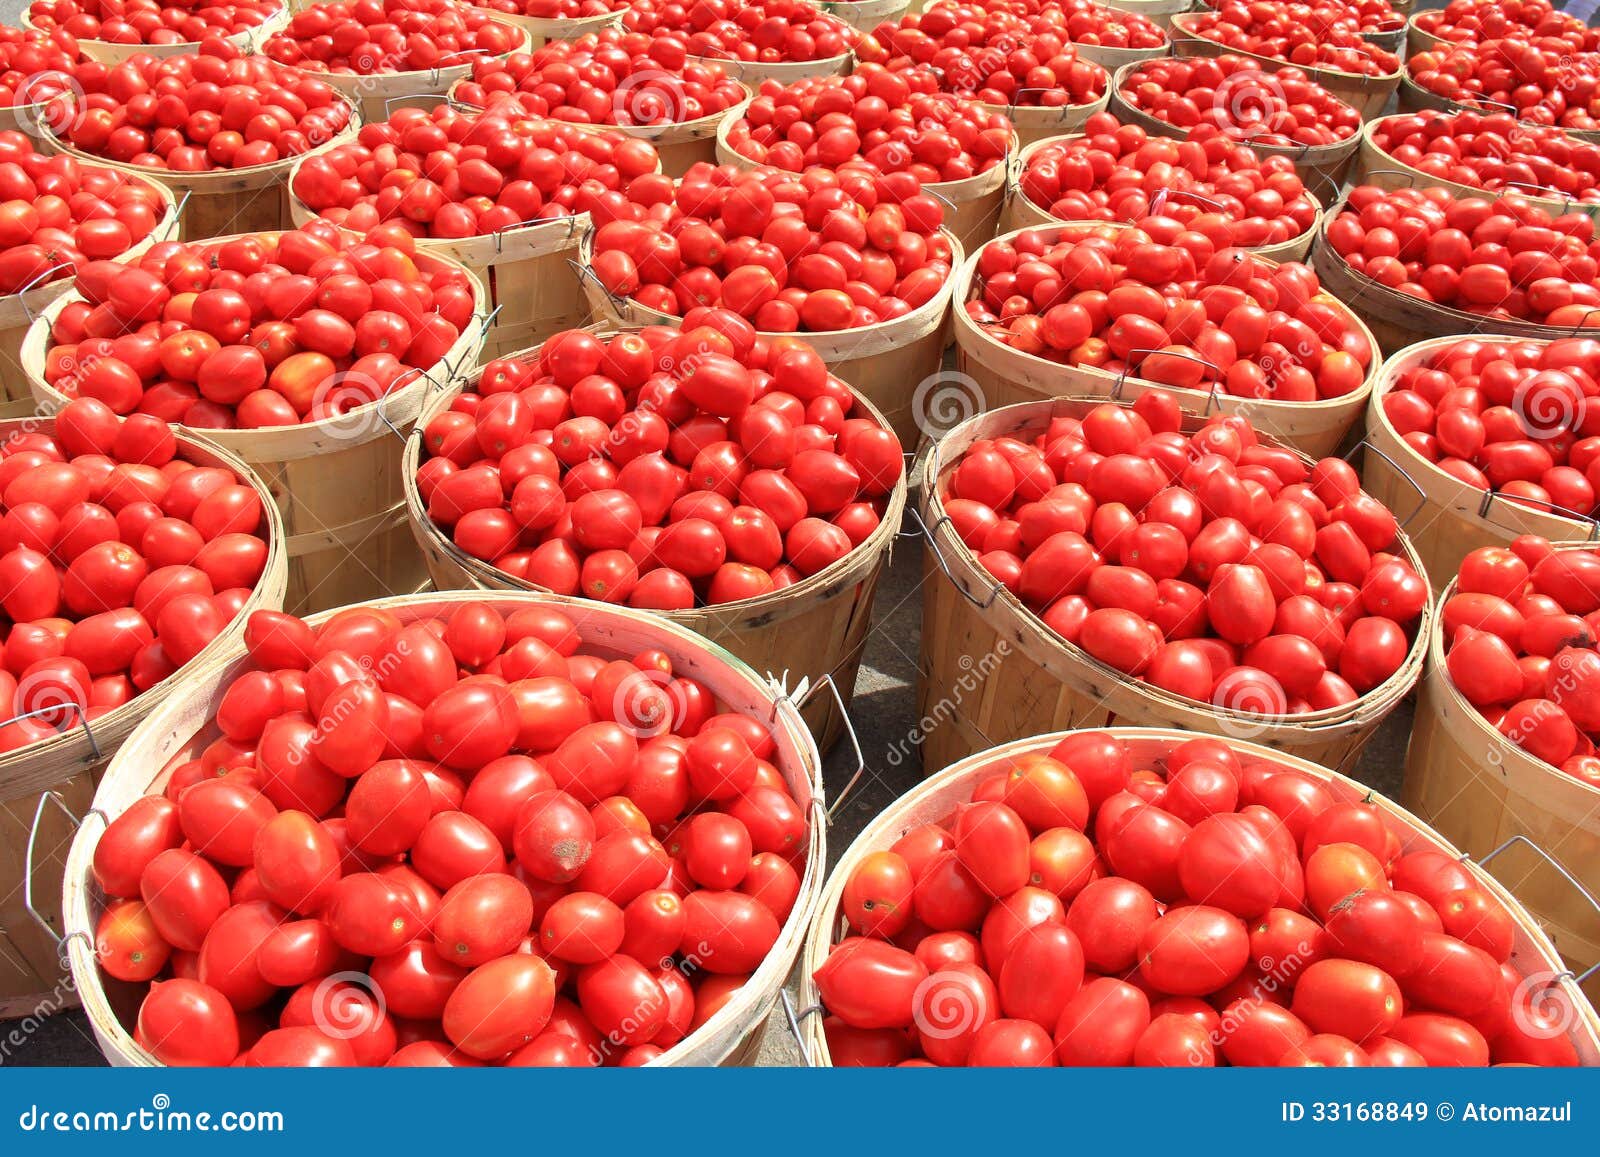 Bushel of tomatoes cost